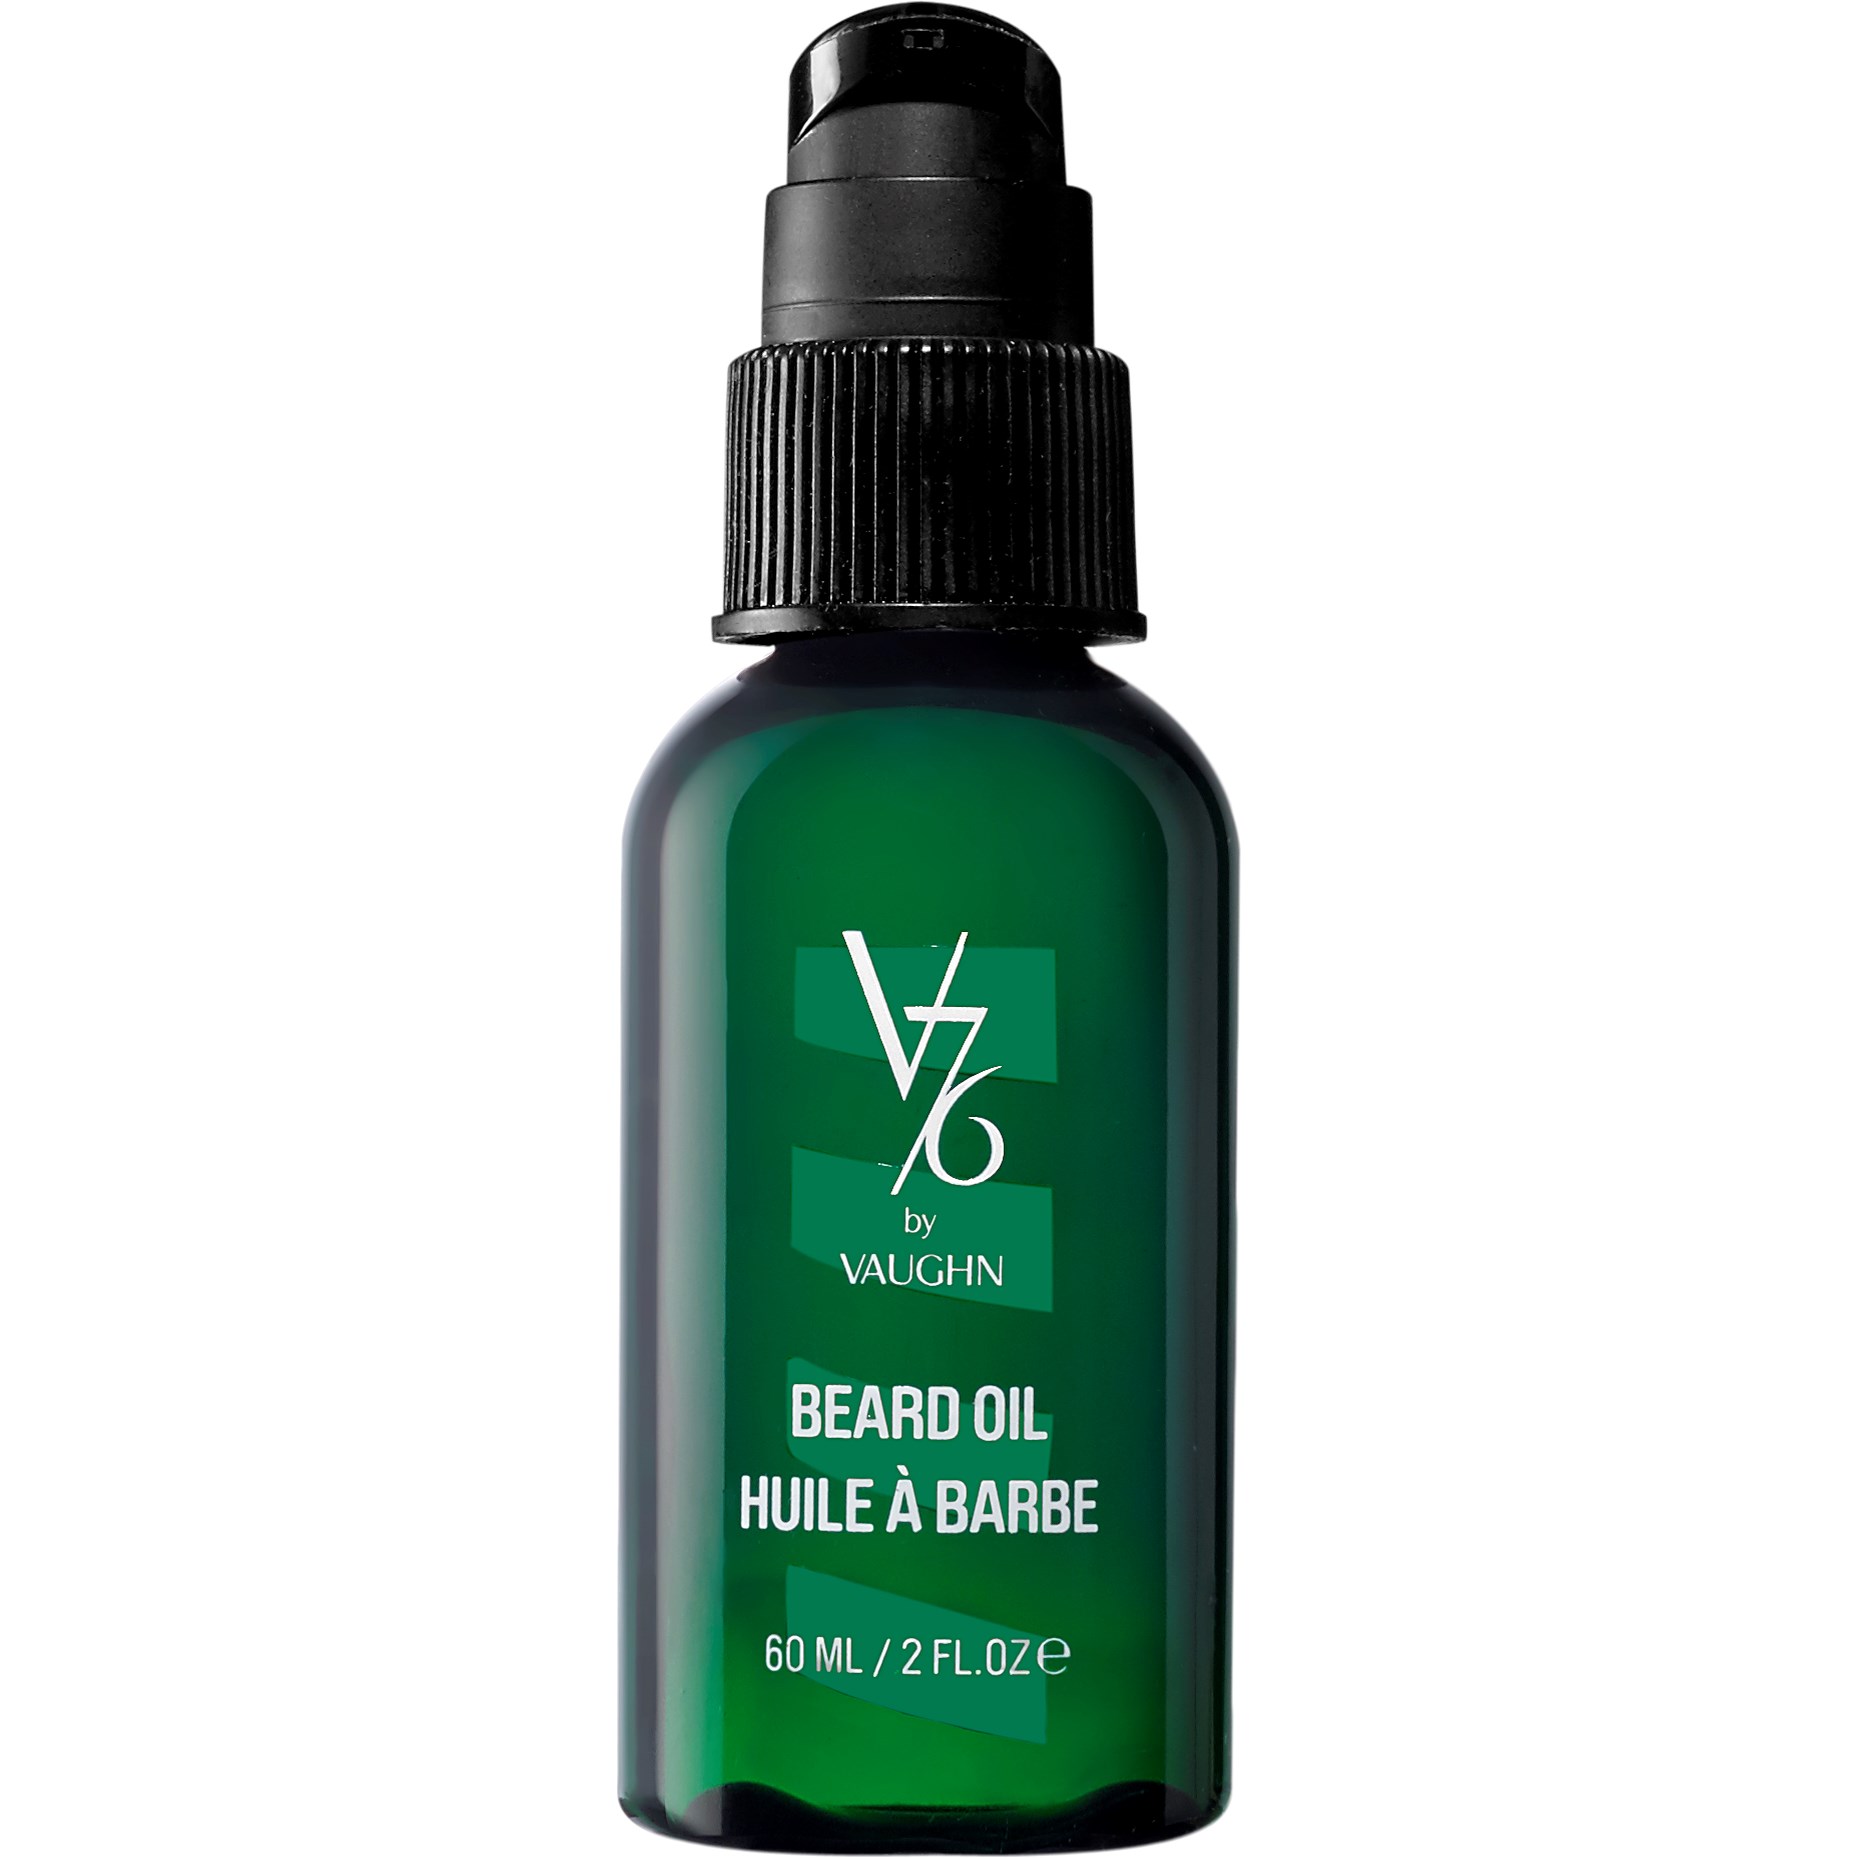 V76 by Vaughn Beard Oil 60 ml